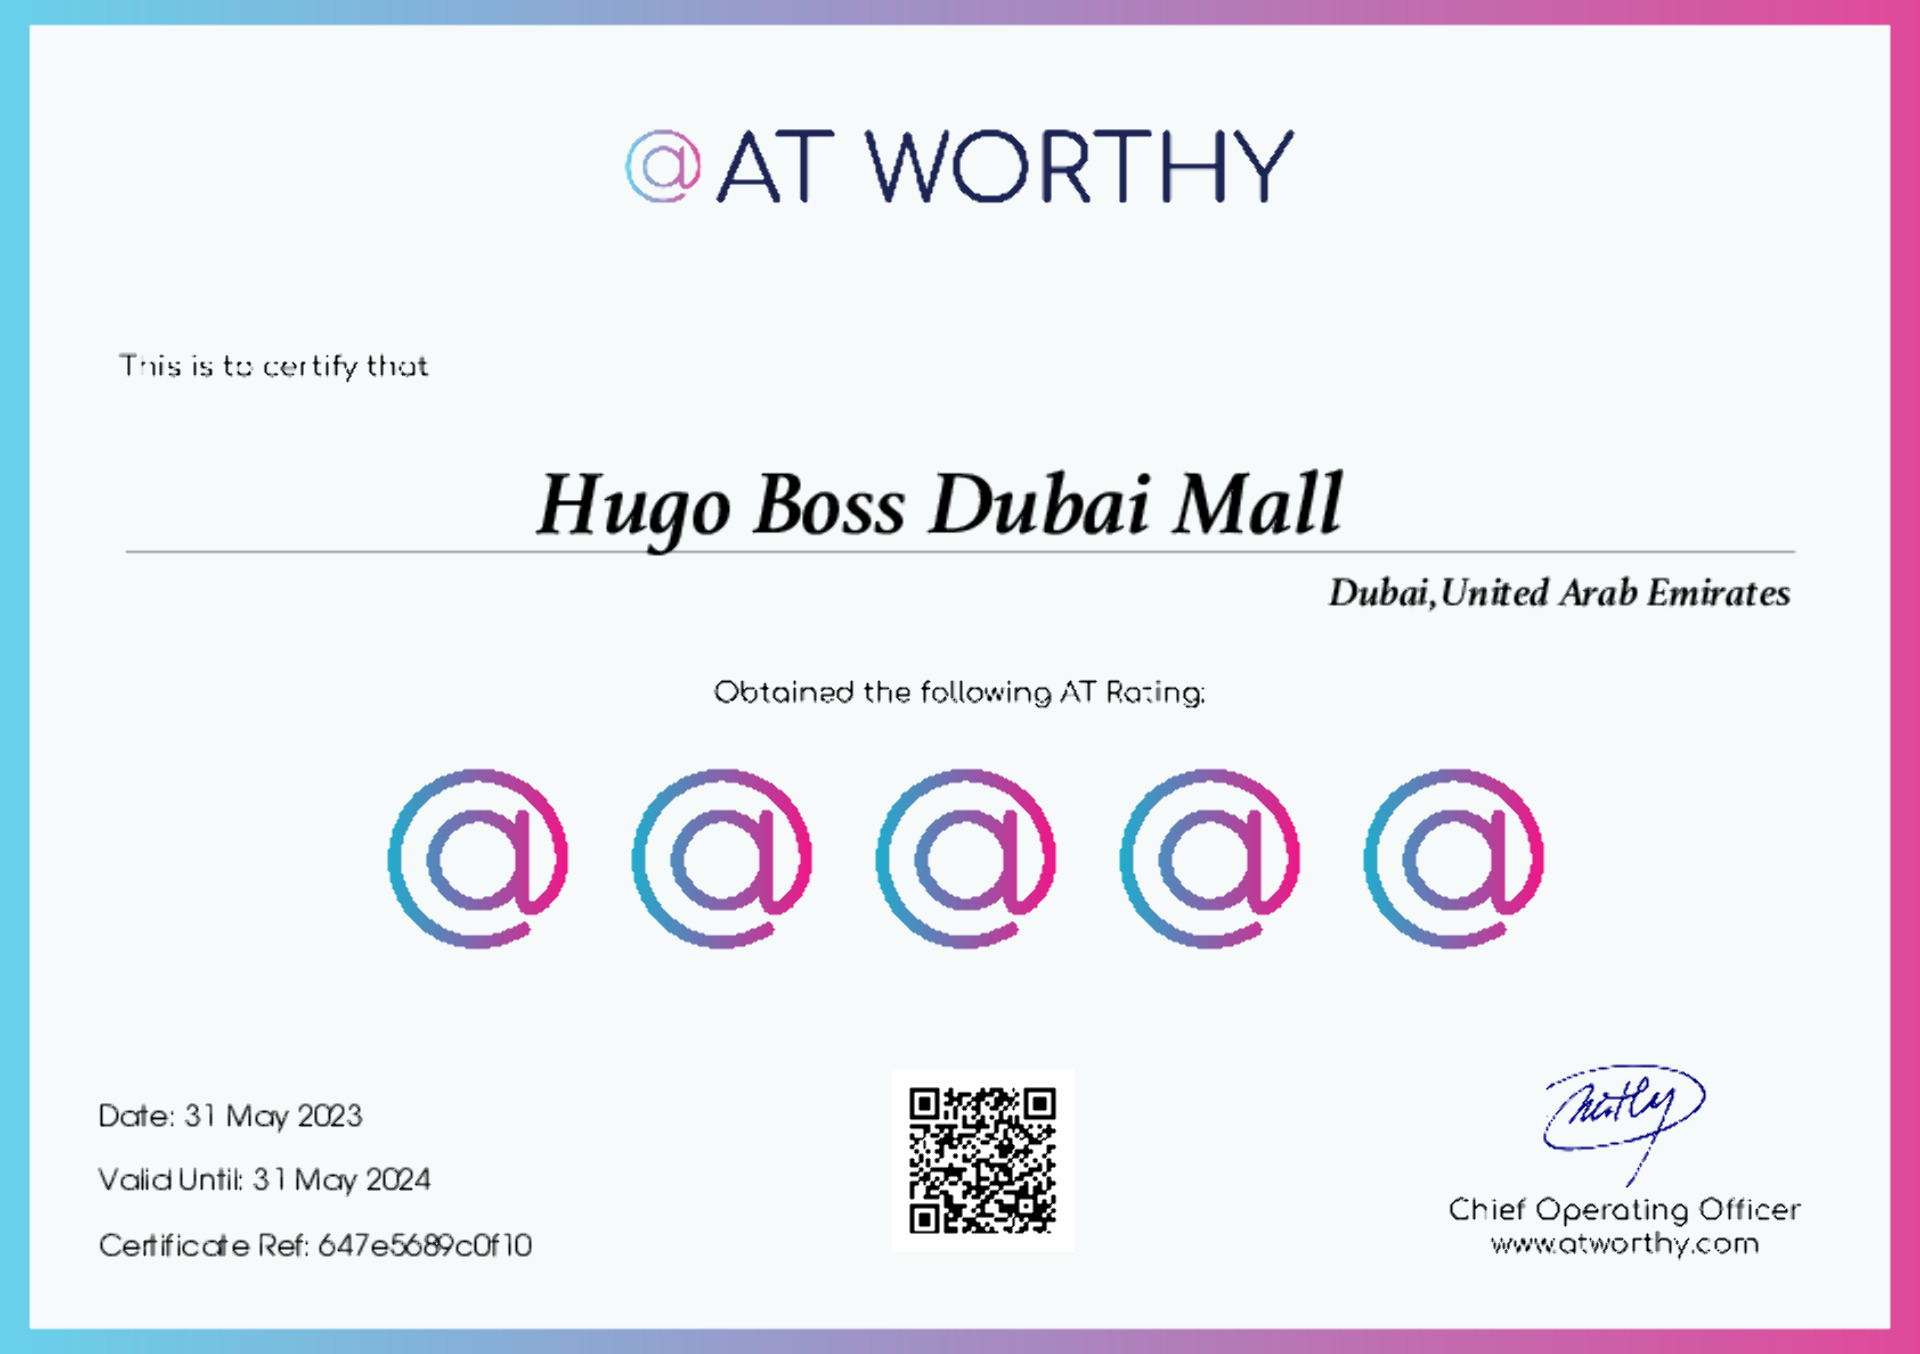 Hugo Boss Dubai Mall Certificate